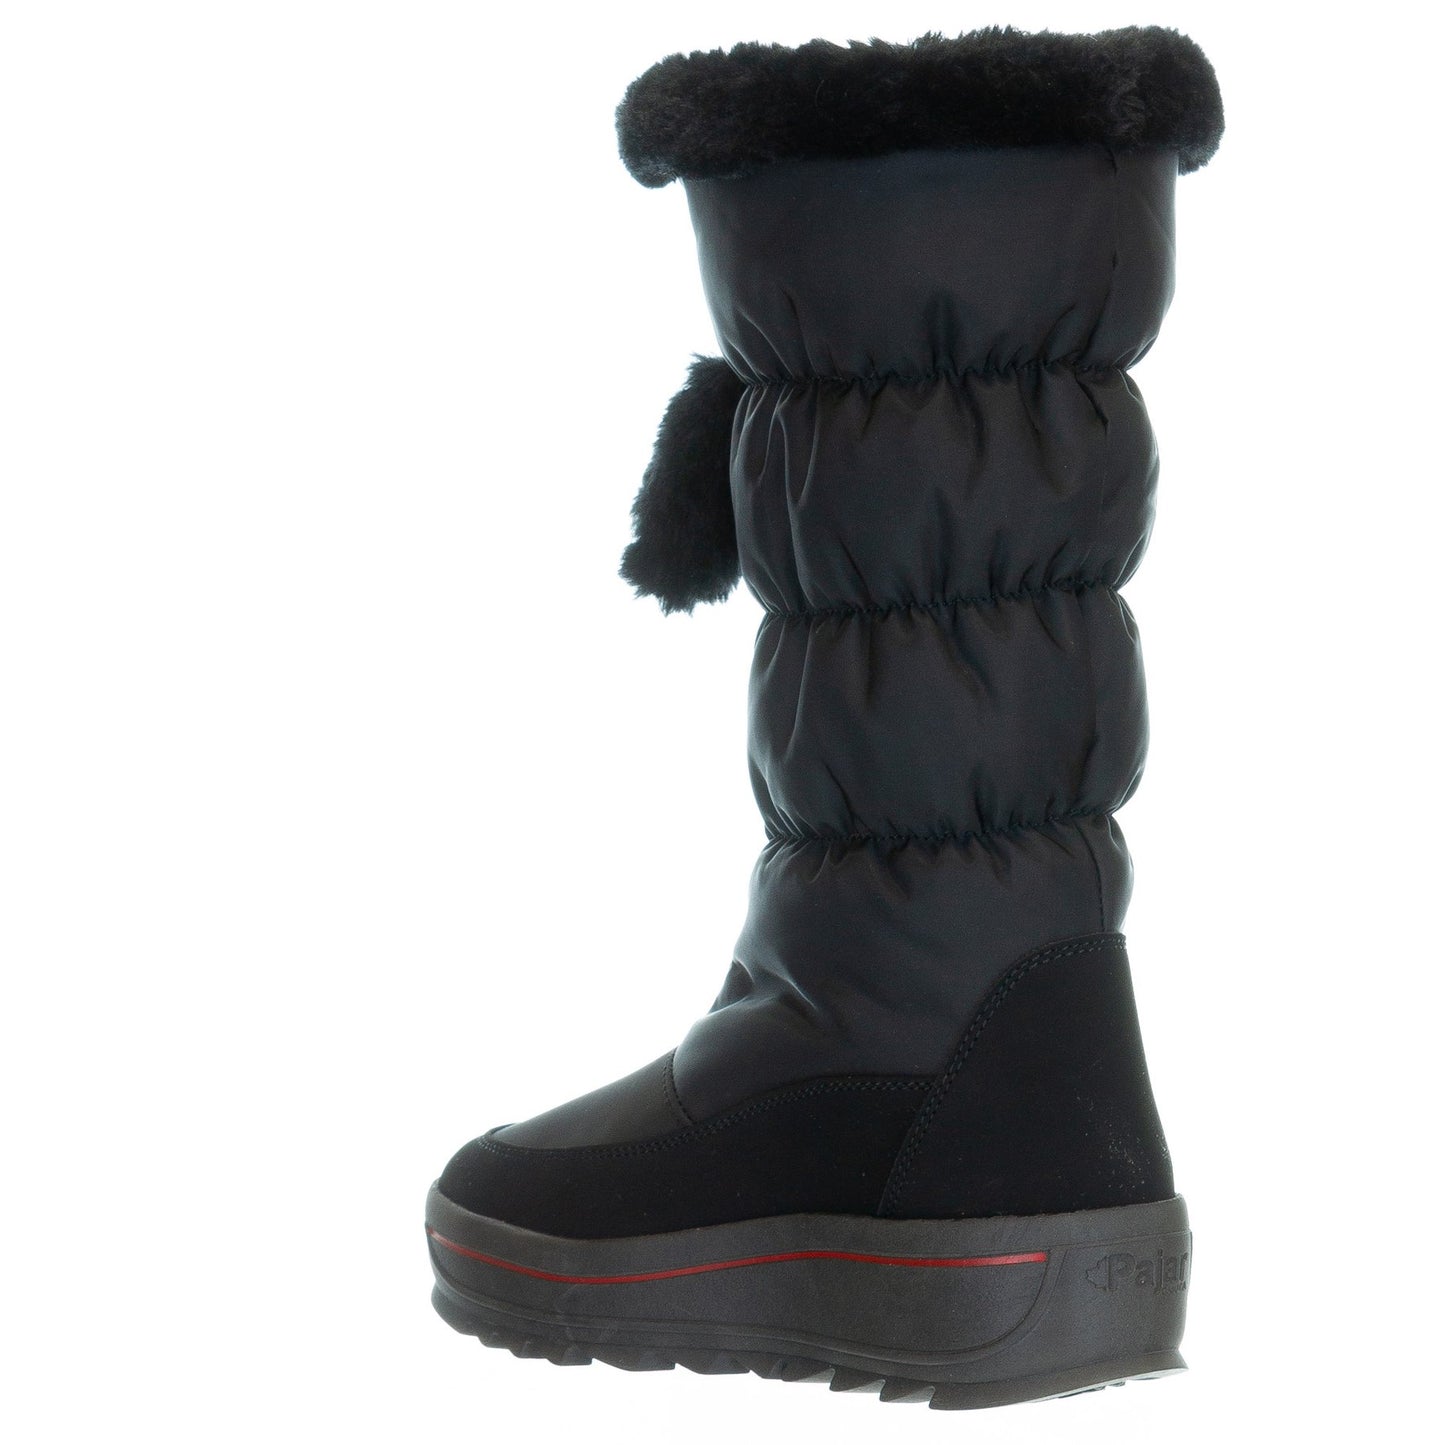 TOBOGGAN 2.0 IRON BLACK Women's Winter Boots